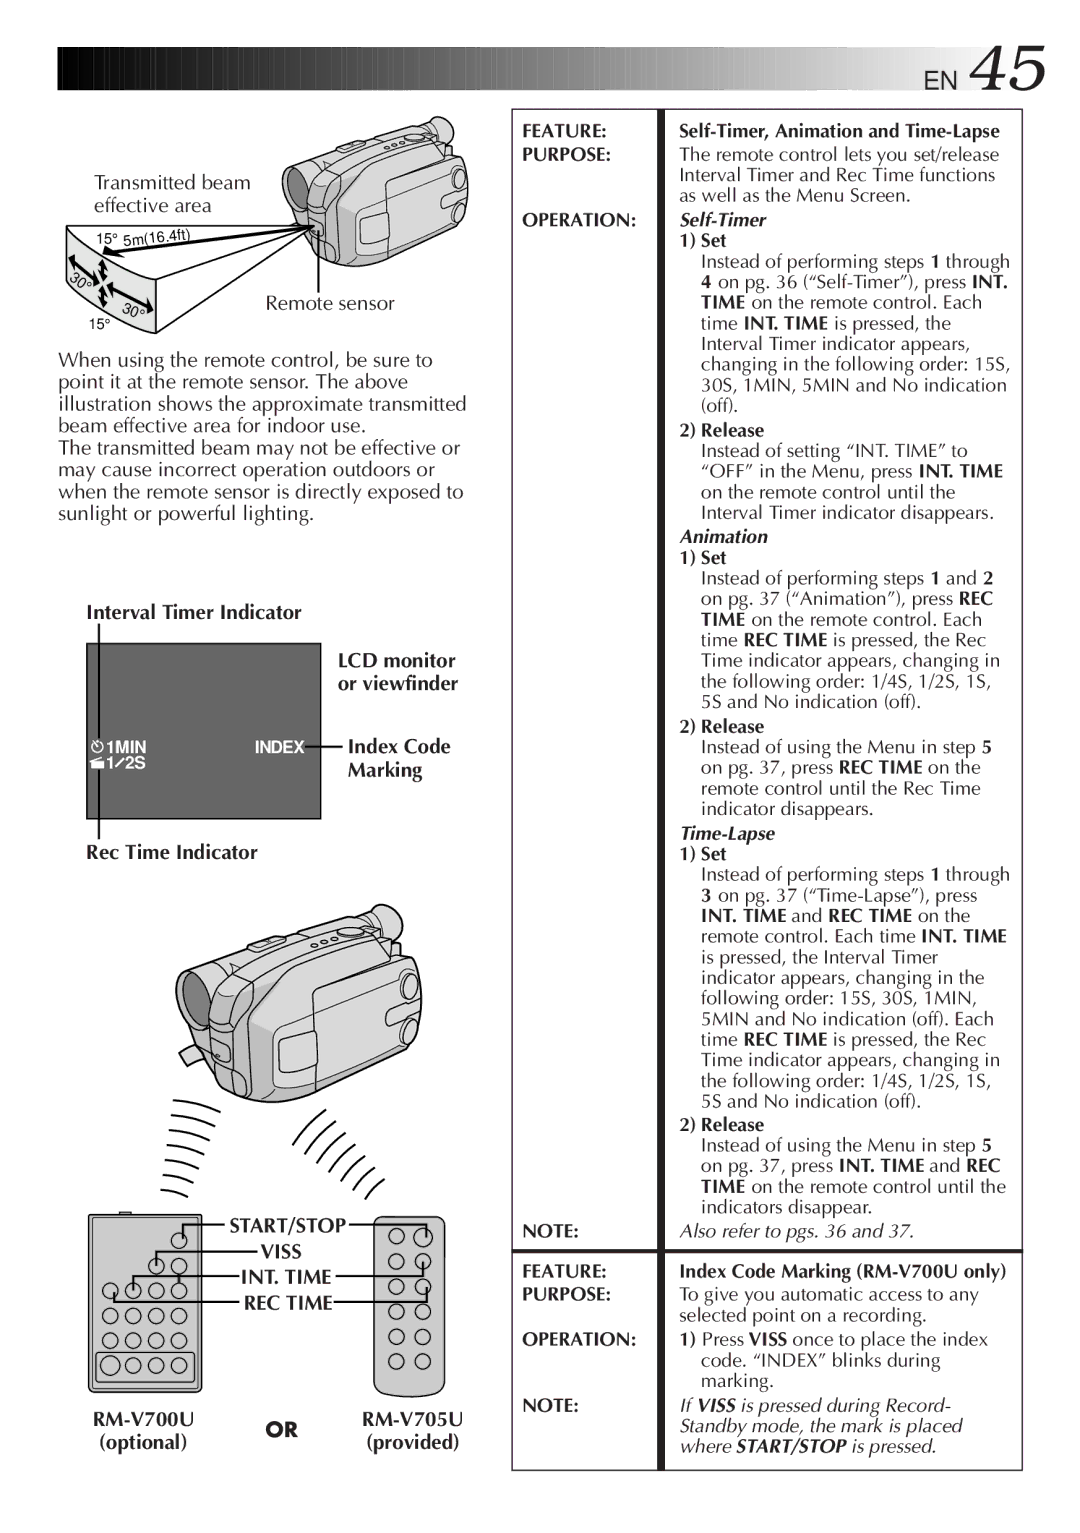 JVC GR-AXM300 manual Transmitted beam effective area, Interval Timer Indicator, Rec Time Indicator 